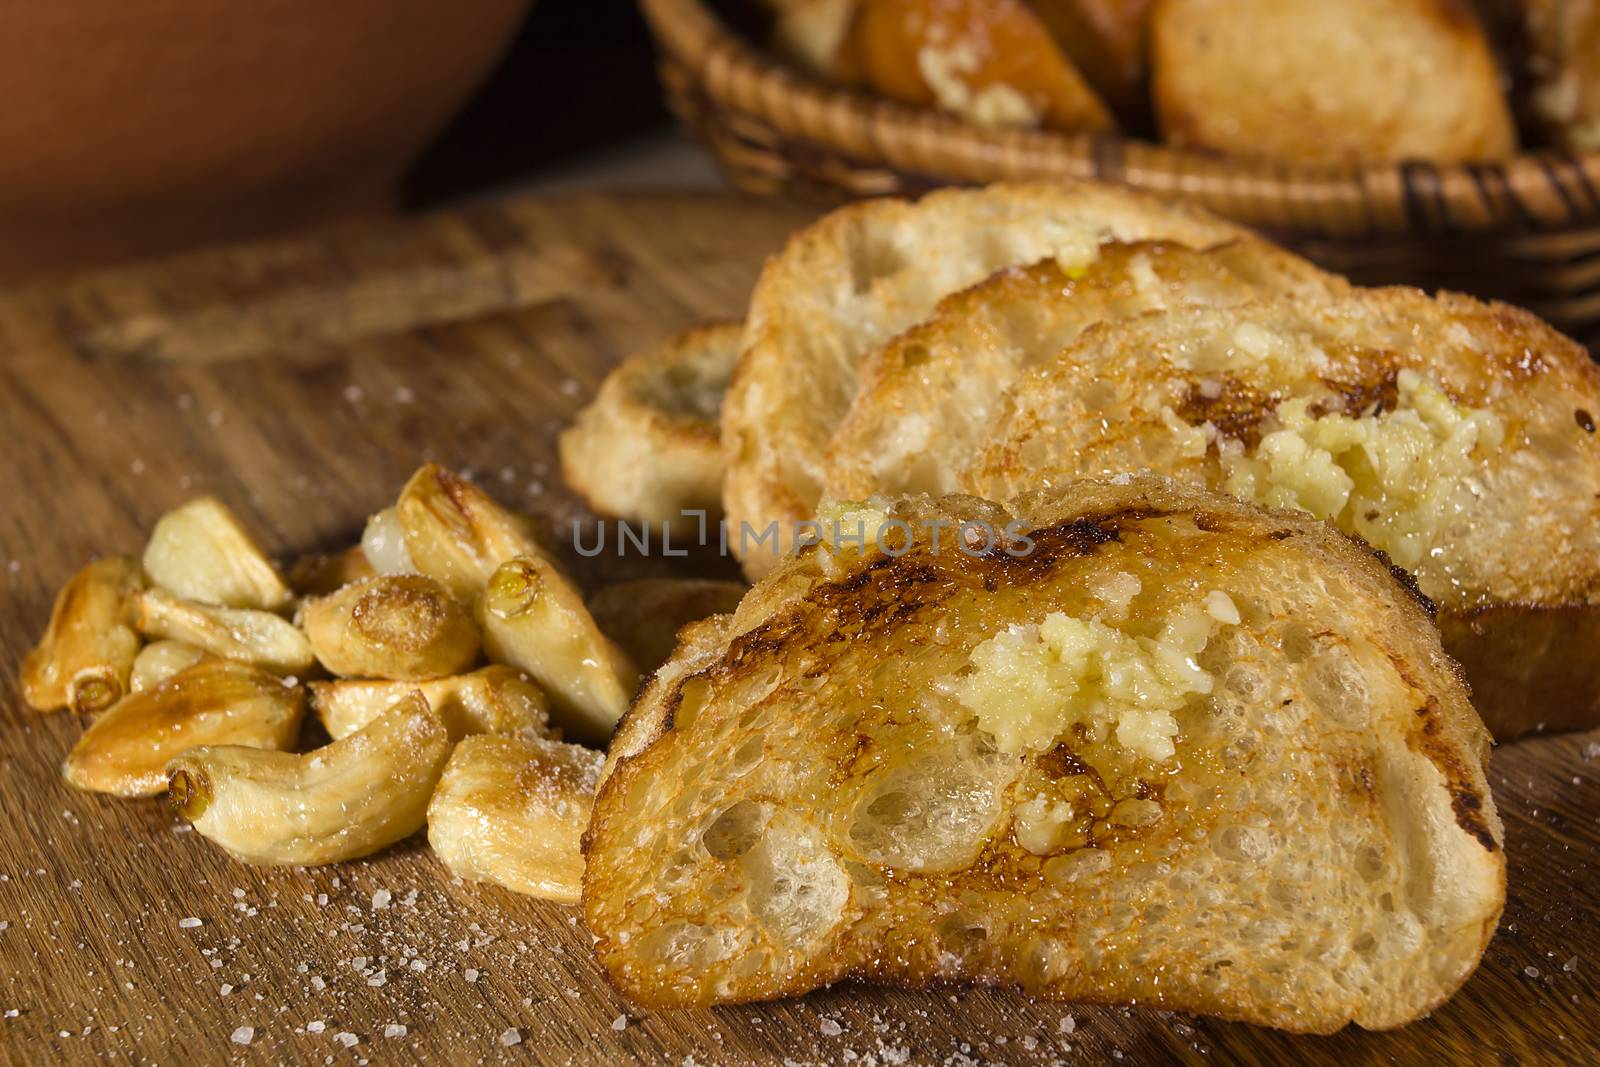 Fried garlic bread and garlic closeup on a wooden board